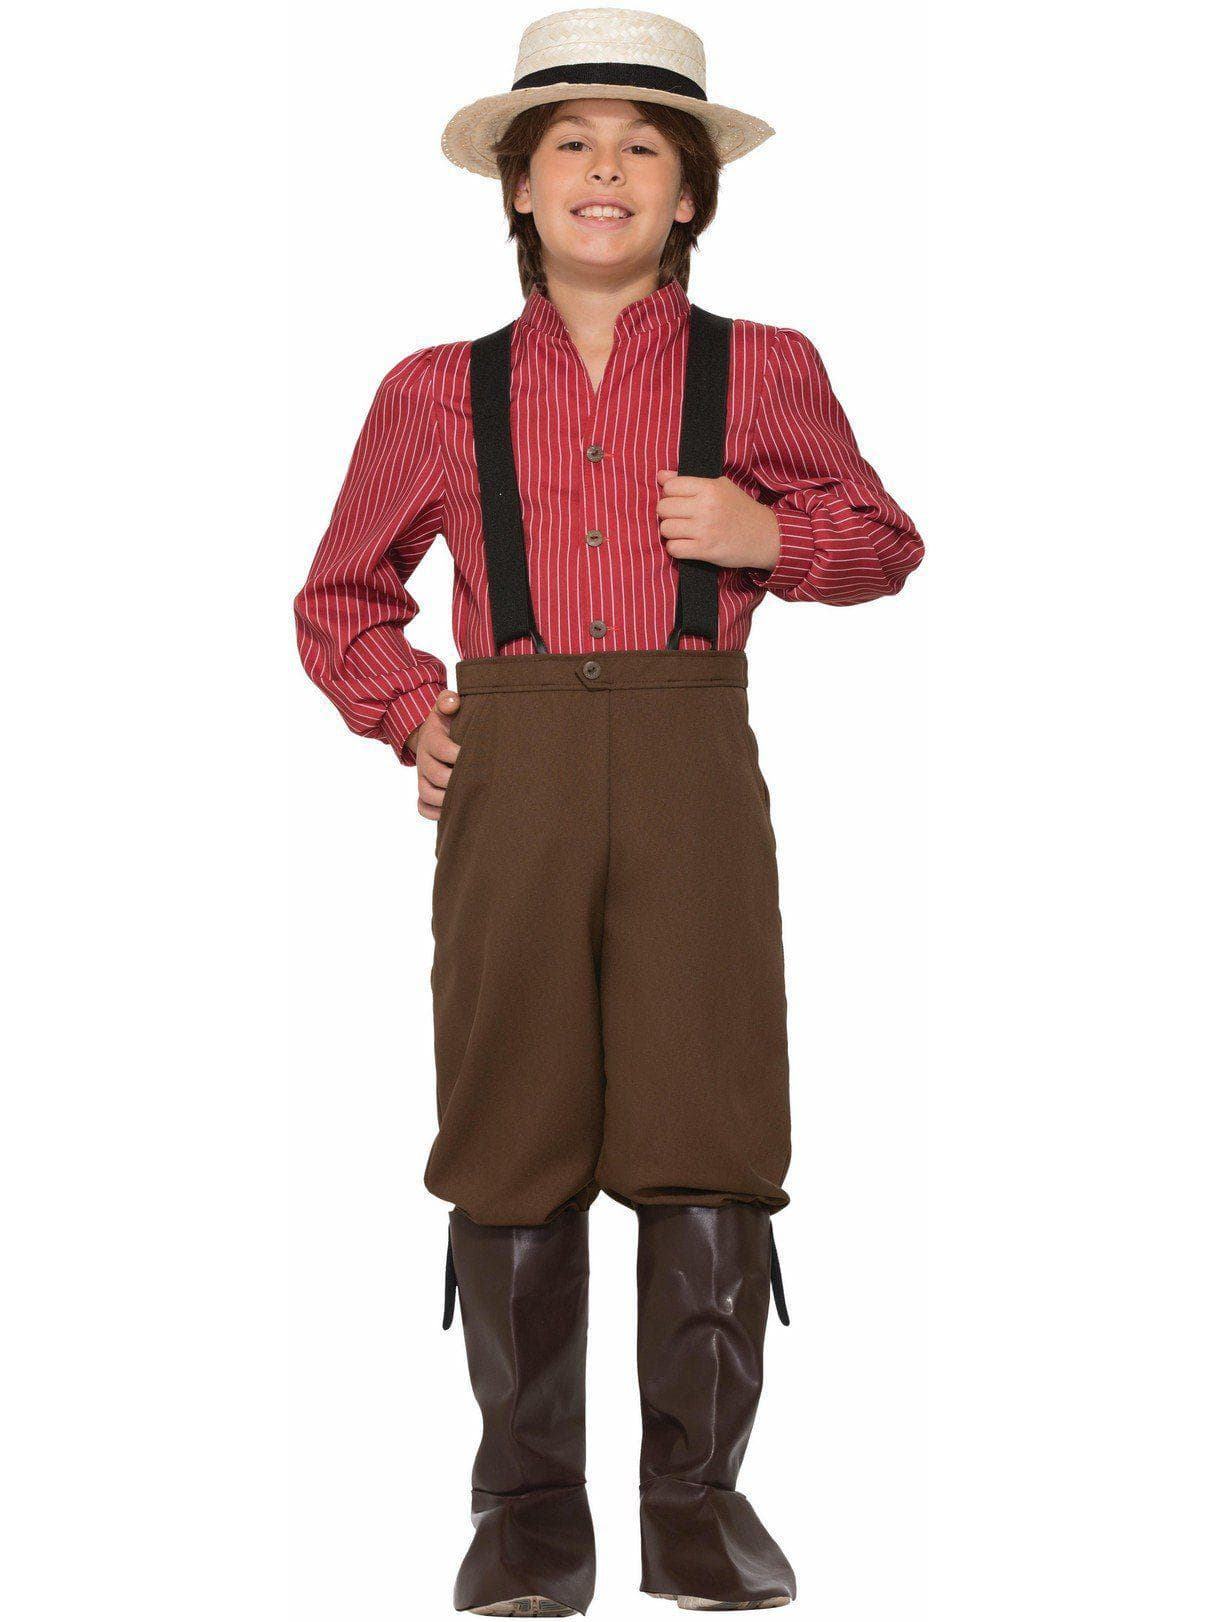 Kid's Pioneer Boy Costume - costumes.com